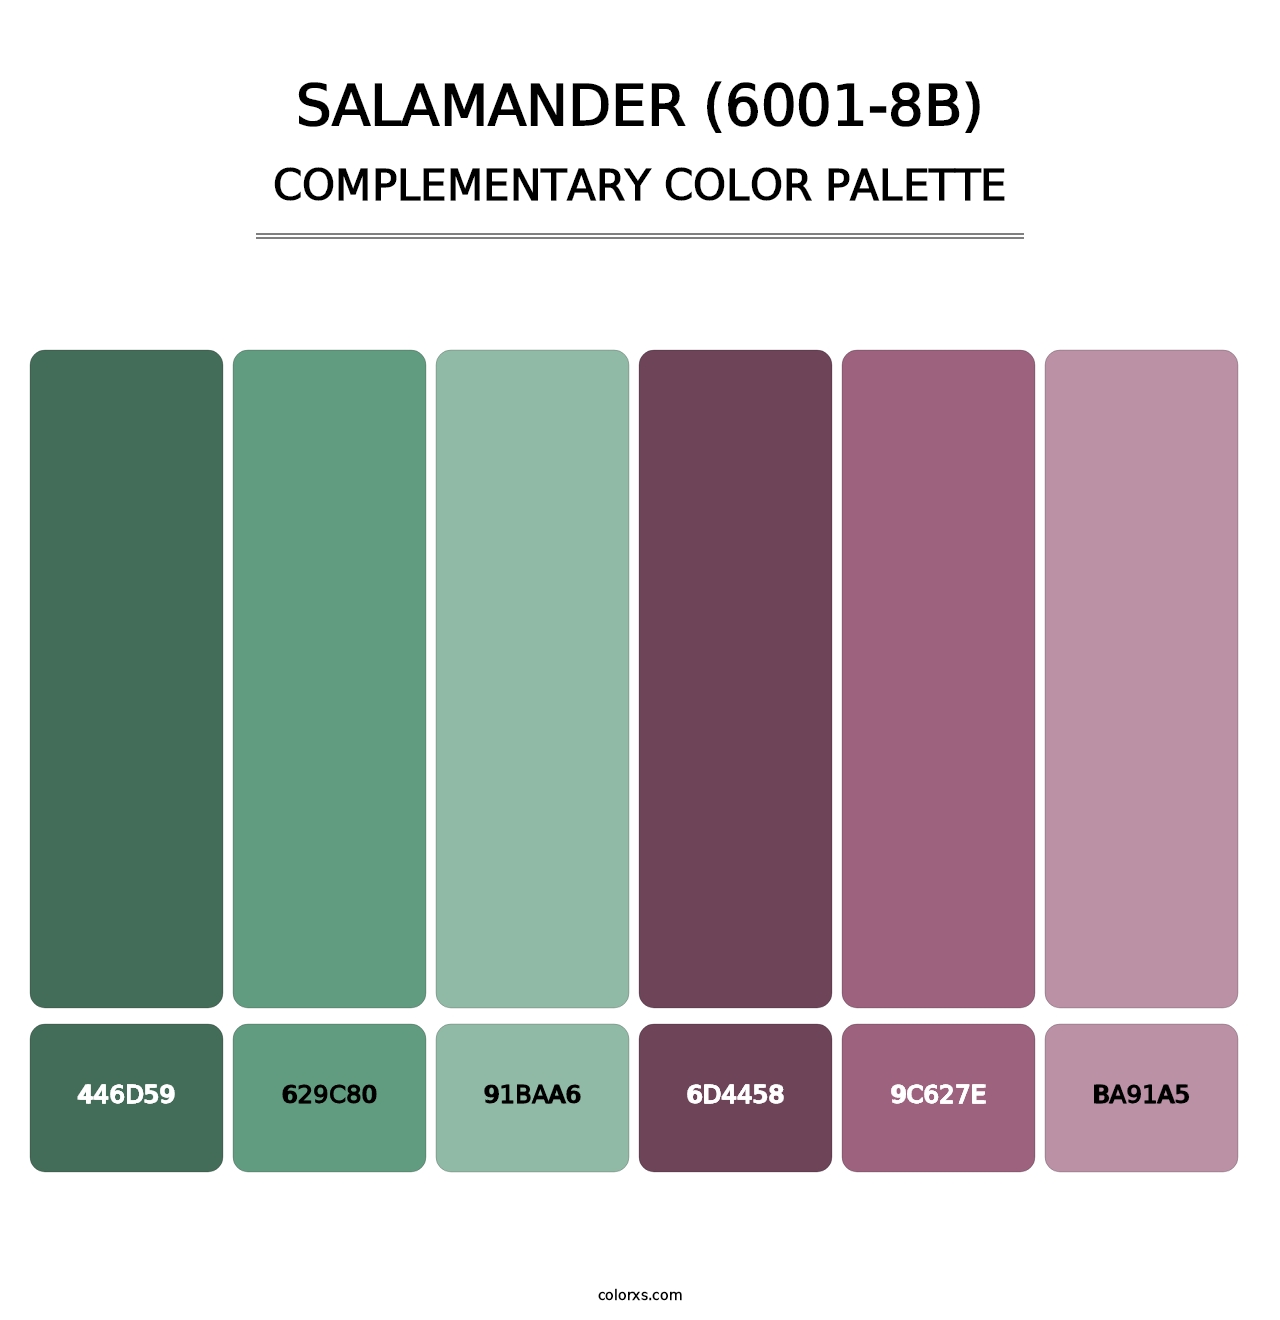 Salamander (6001-8B) - Complementary Color Palette